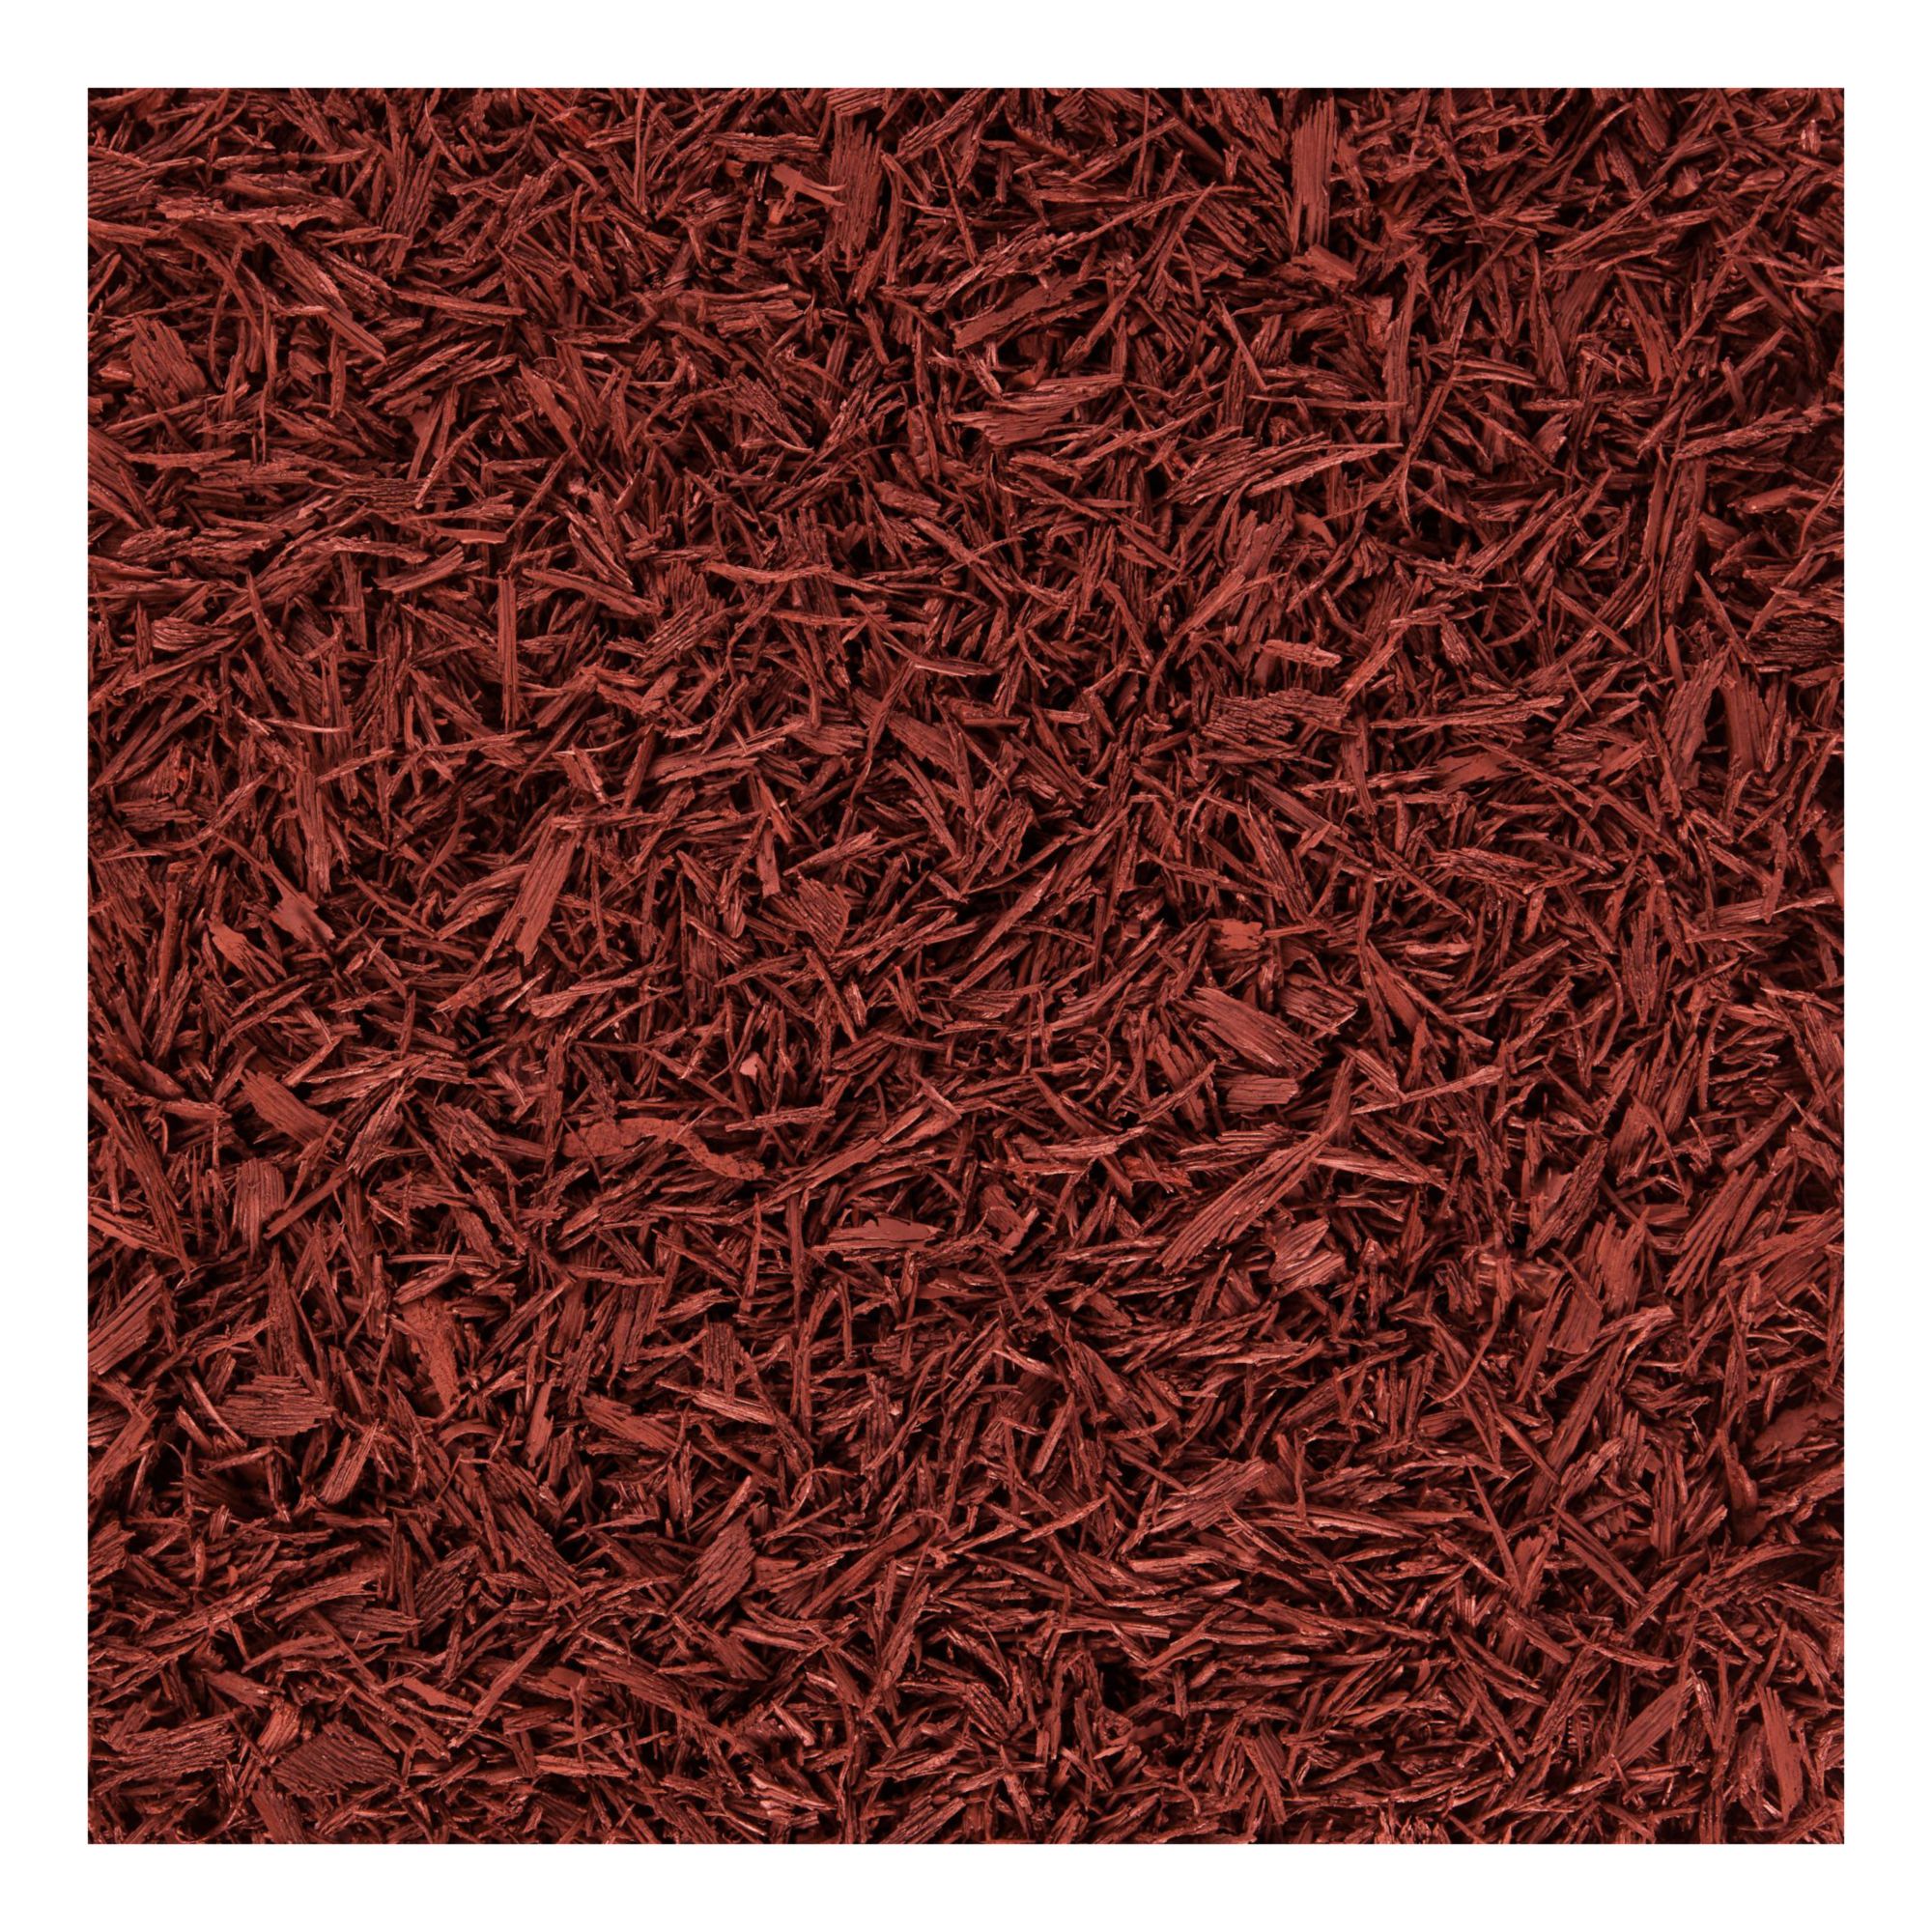 GroundSmart 37.5 cu.-ft. Red Premium Shredded Rubber Mulch